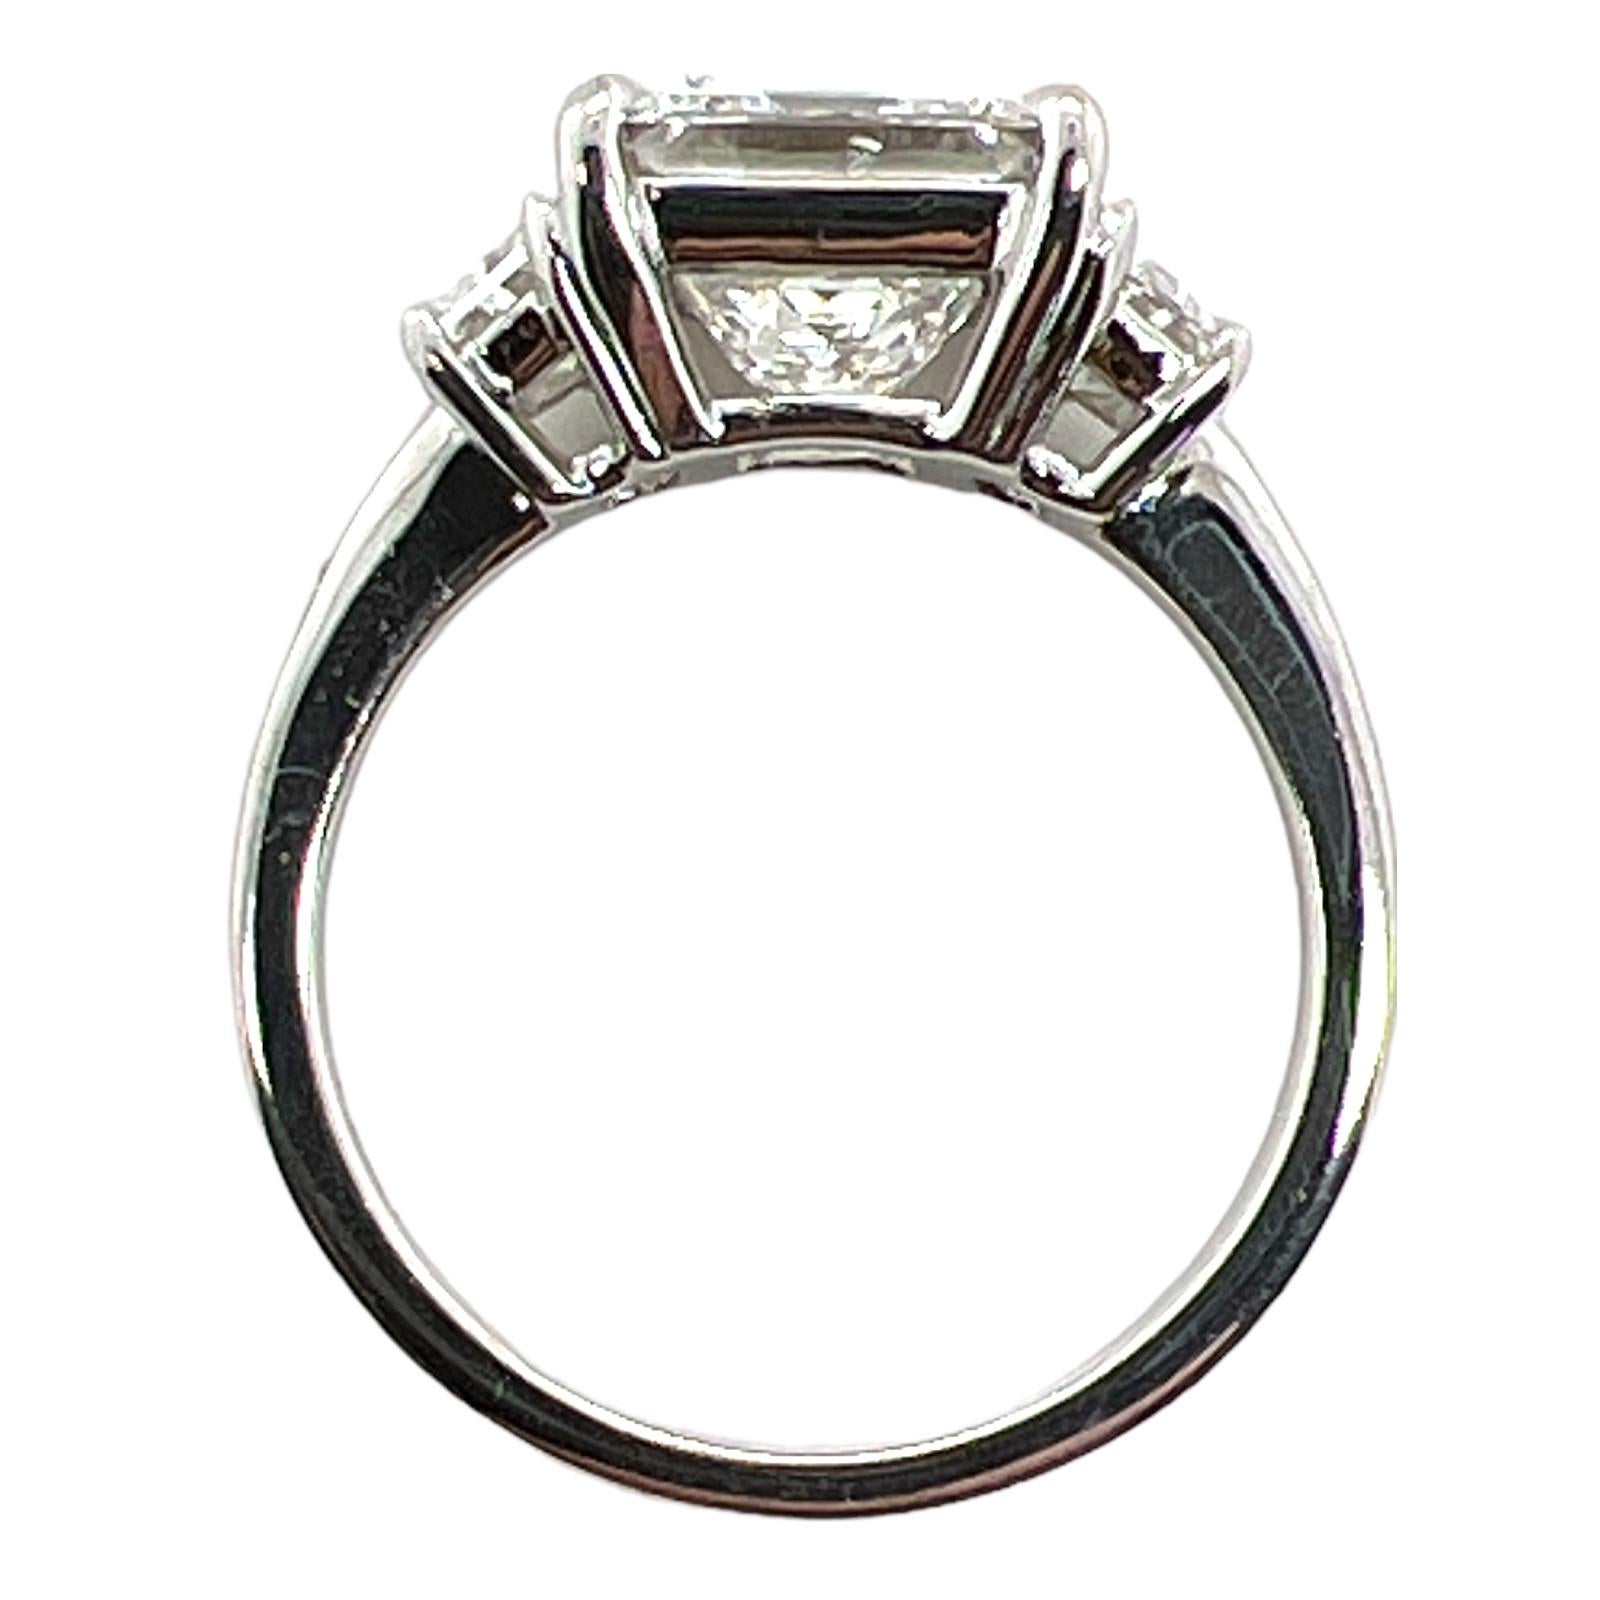 7 carat princess cut diamond ring